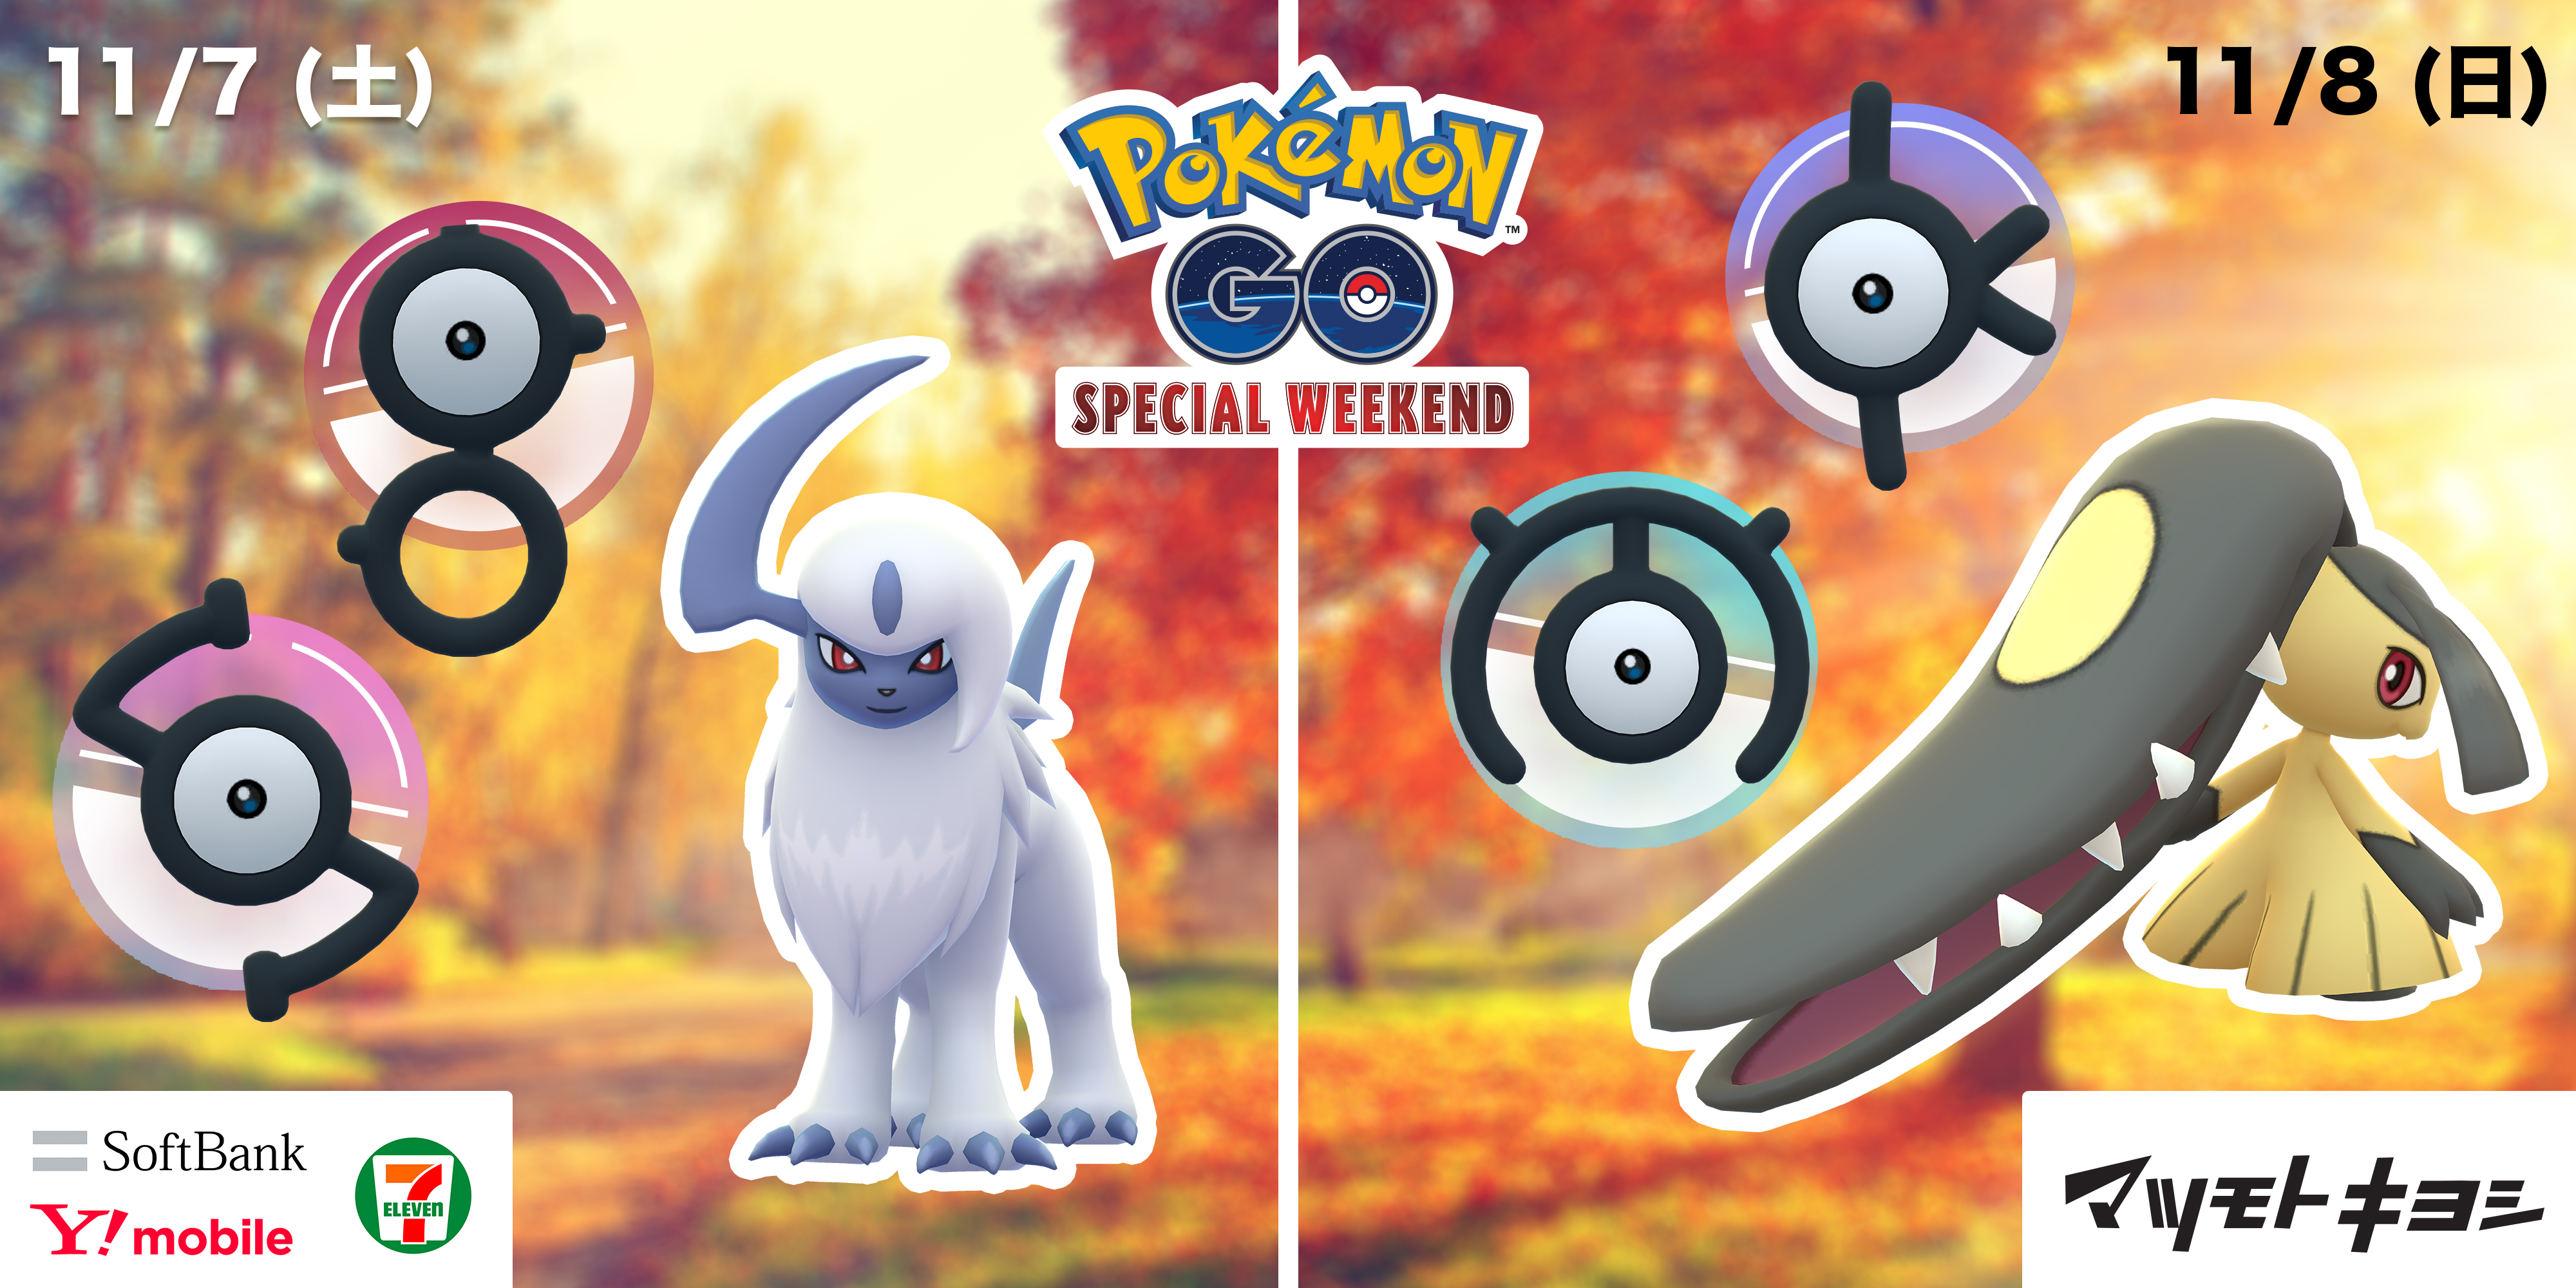 Pokémon GO Special Weekend 7-8. November in Japan 1